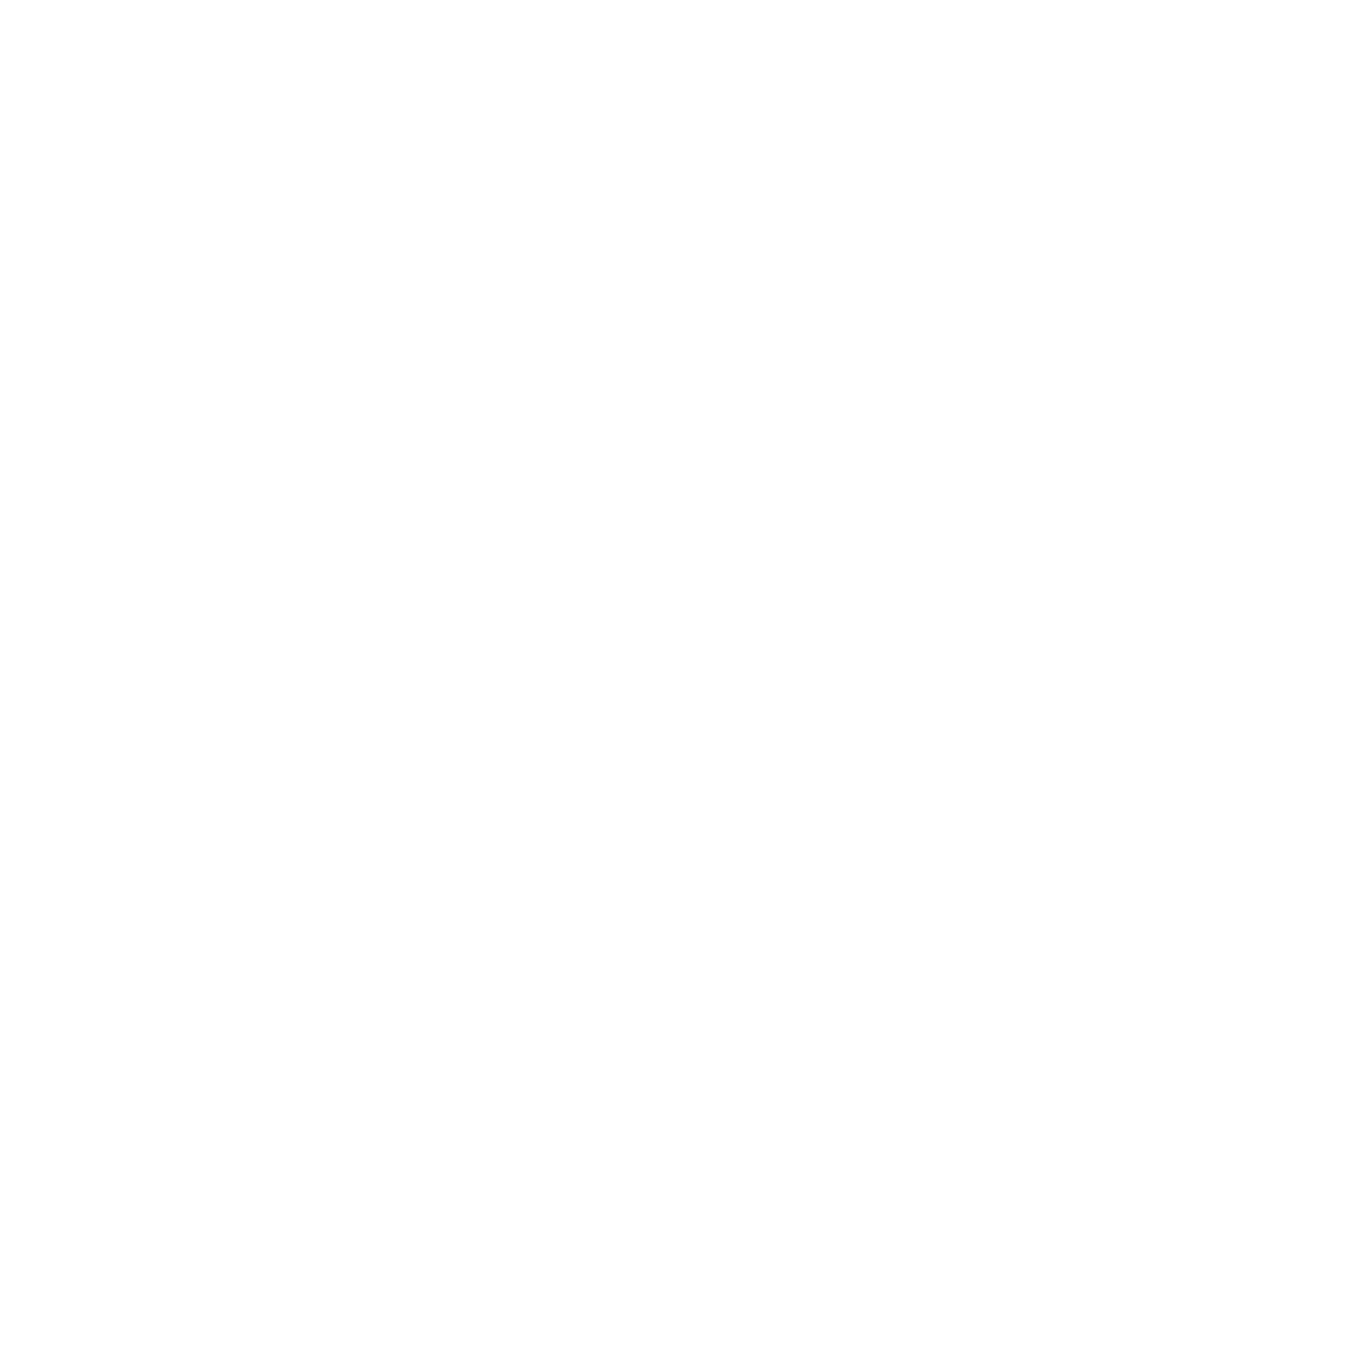 Wordpress logo lion free. Lions clipart purple